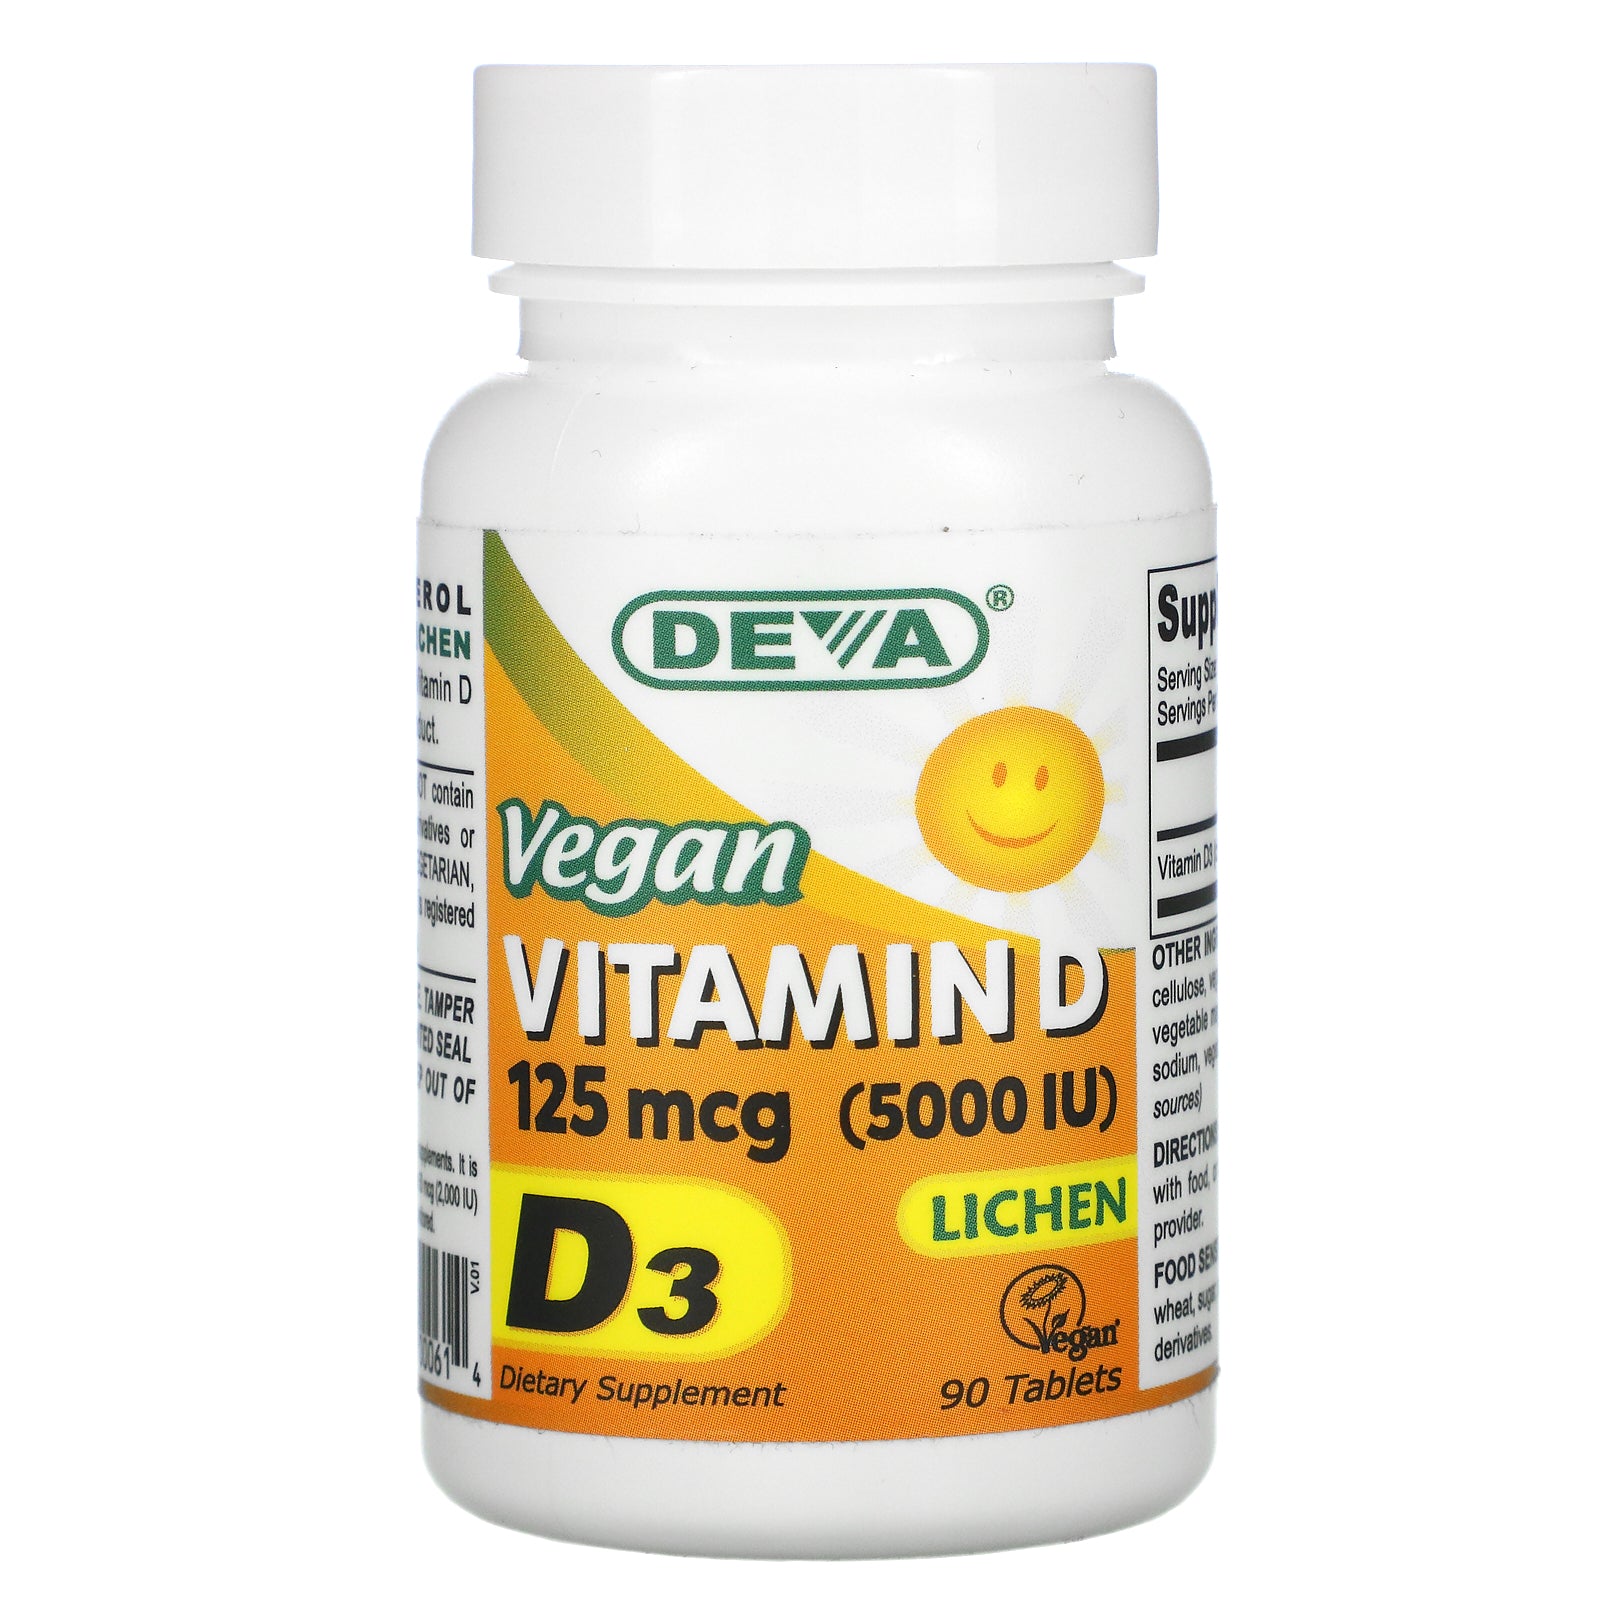 Deva, Vegan Vitamin D, D3